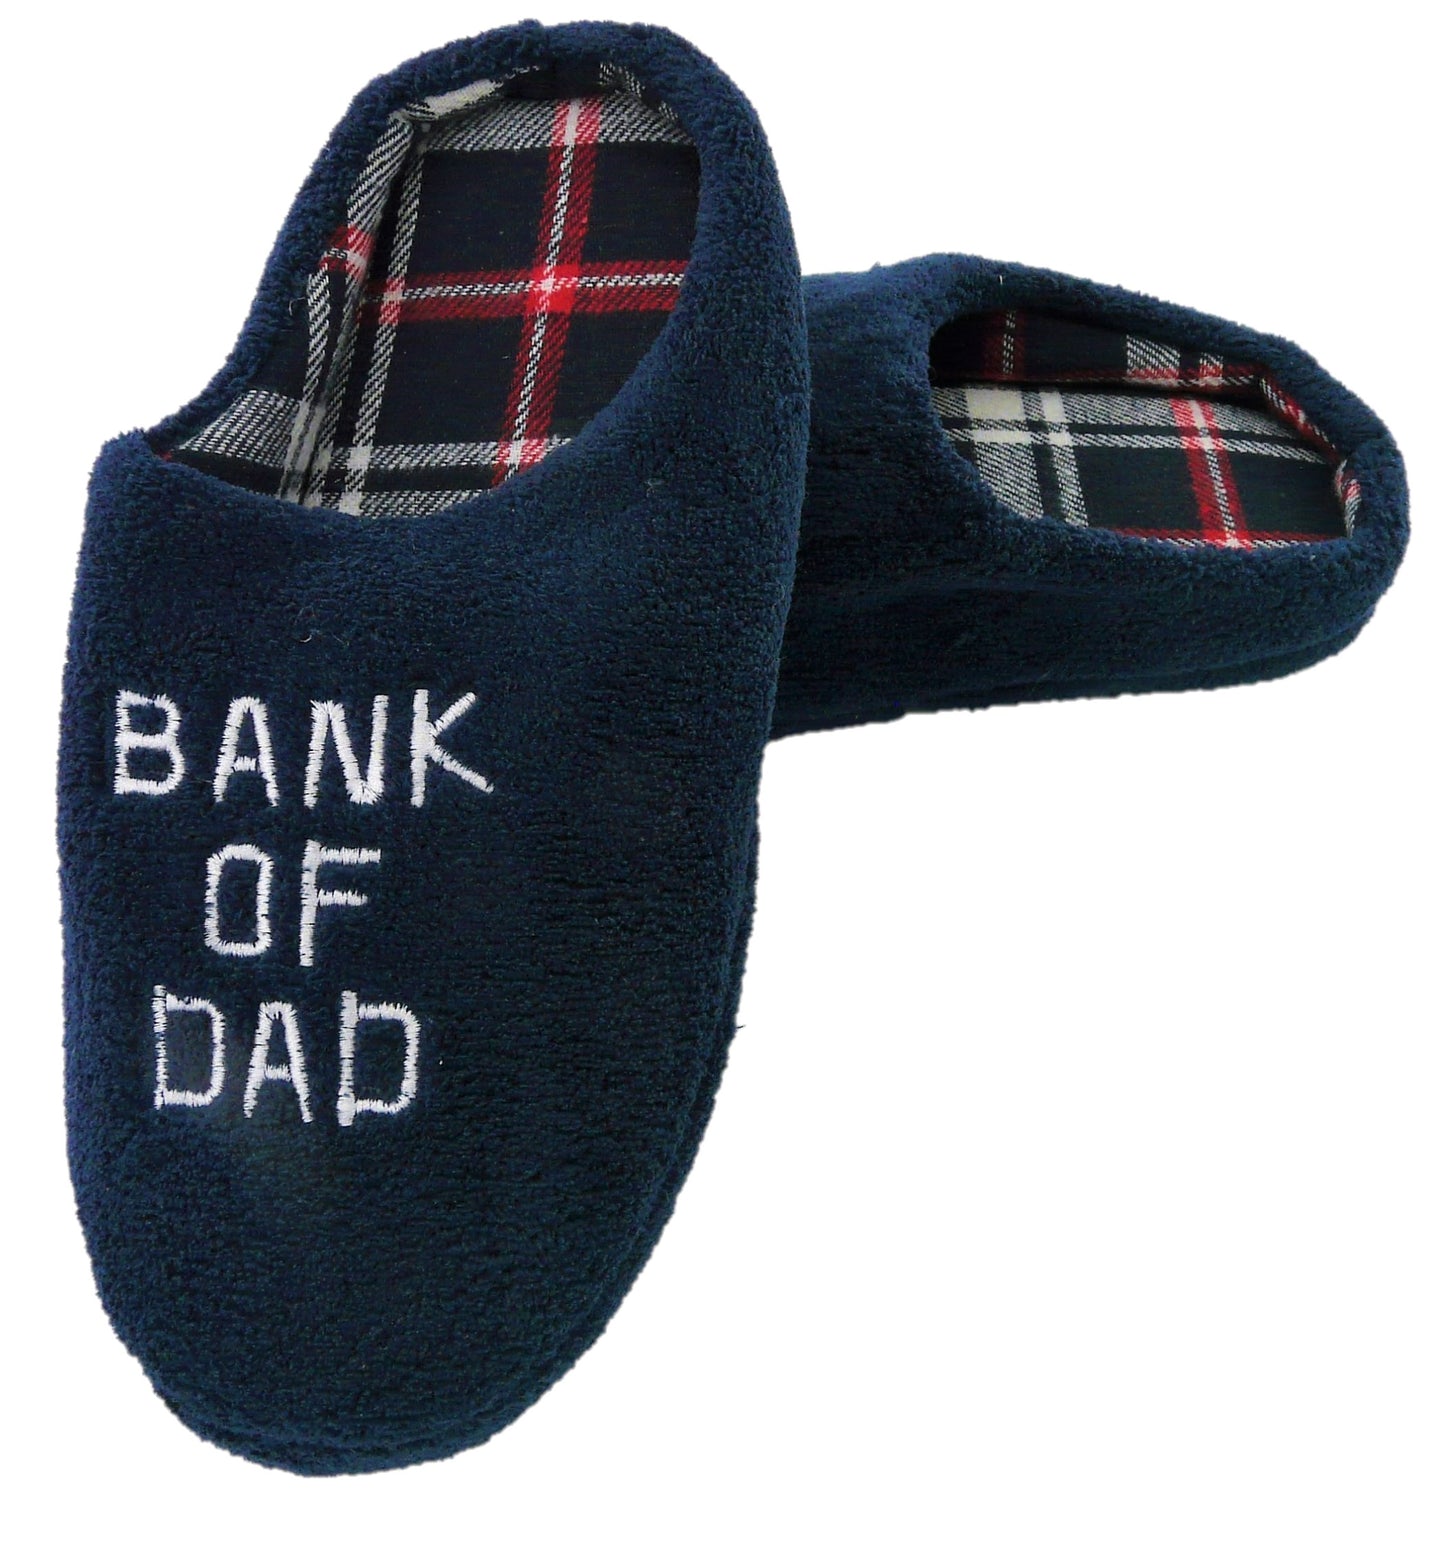 Men's "Bank of Dad" Novelty Mule Slippers